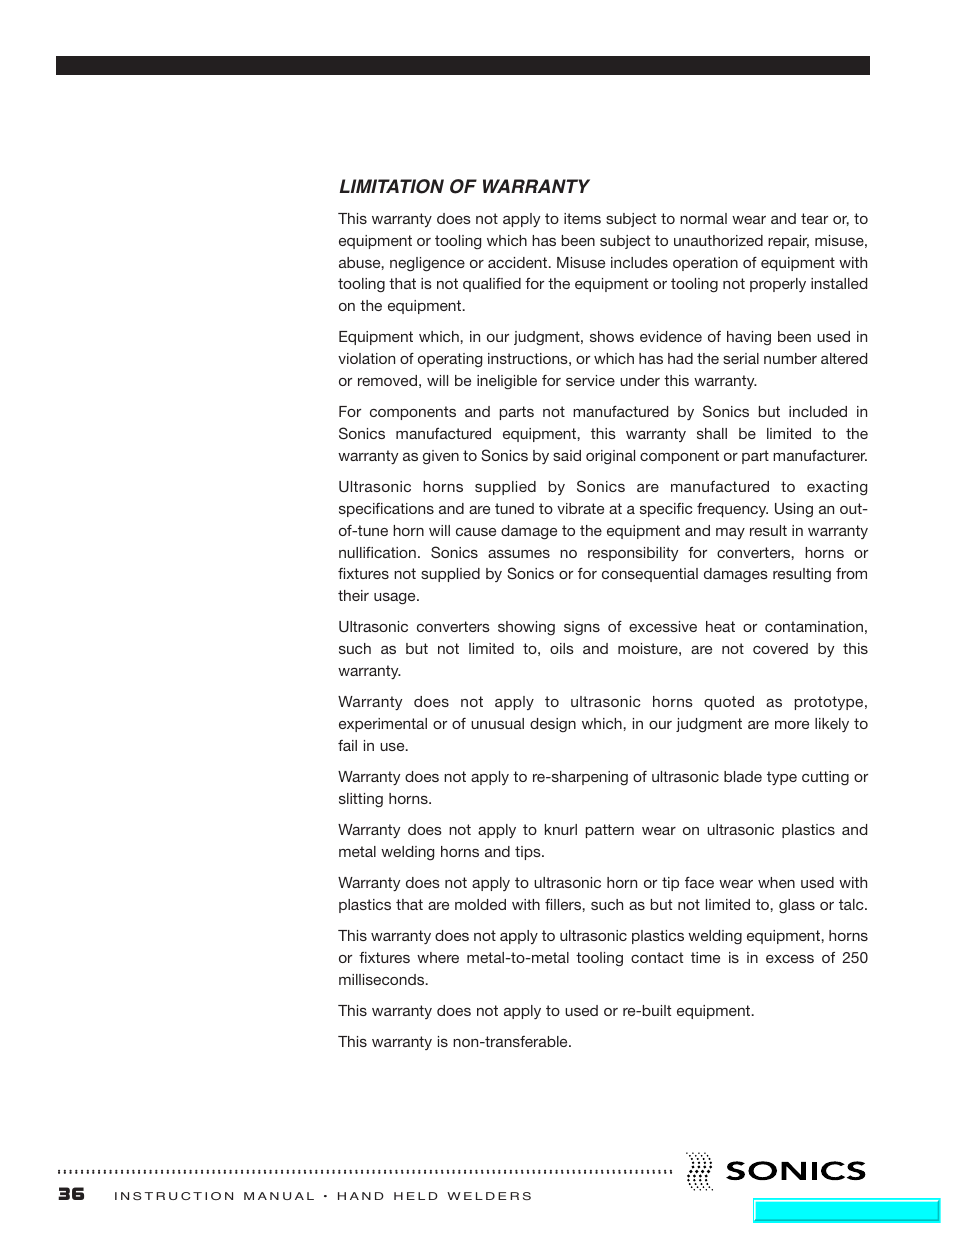 Limitation of warranty | Sonics H540 E User Manual | Page 37 / 39